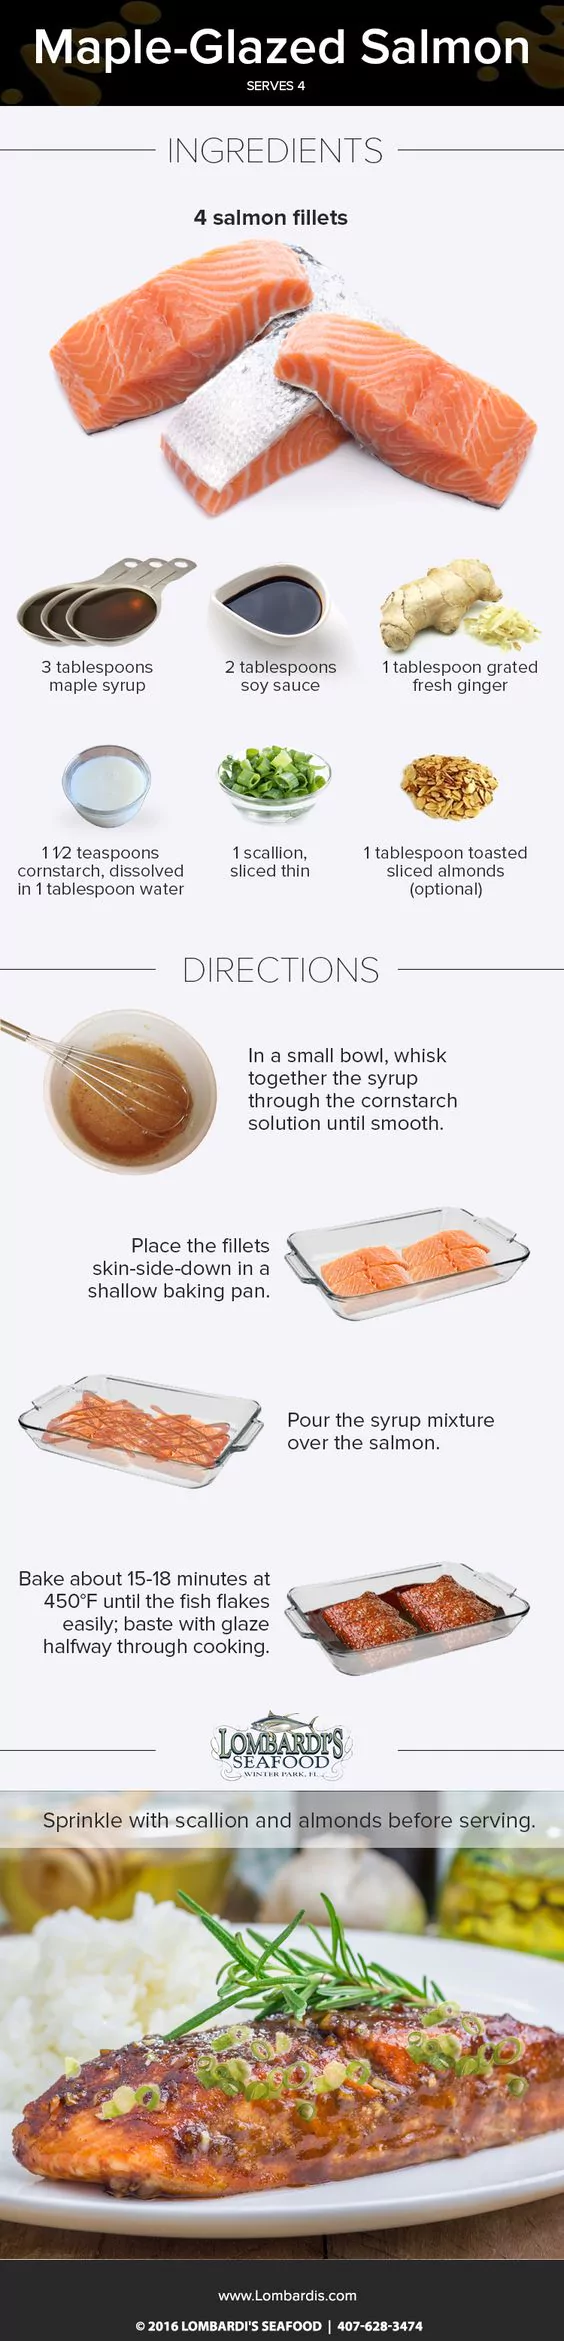 Maple-Glazed Salmon